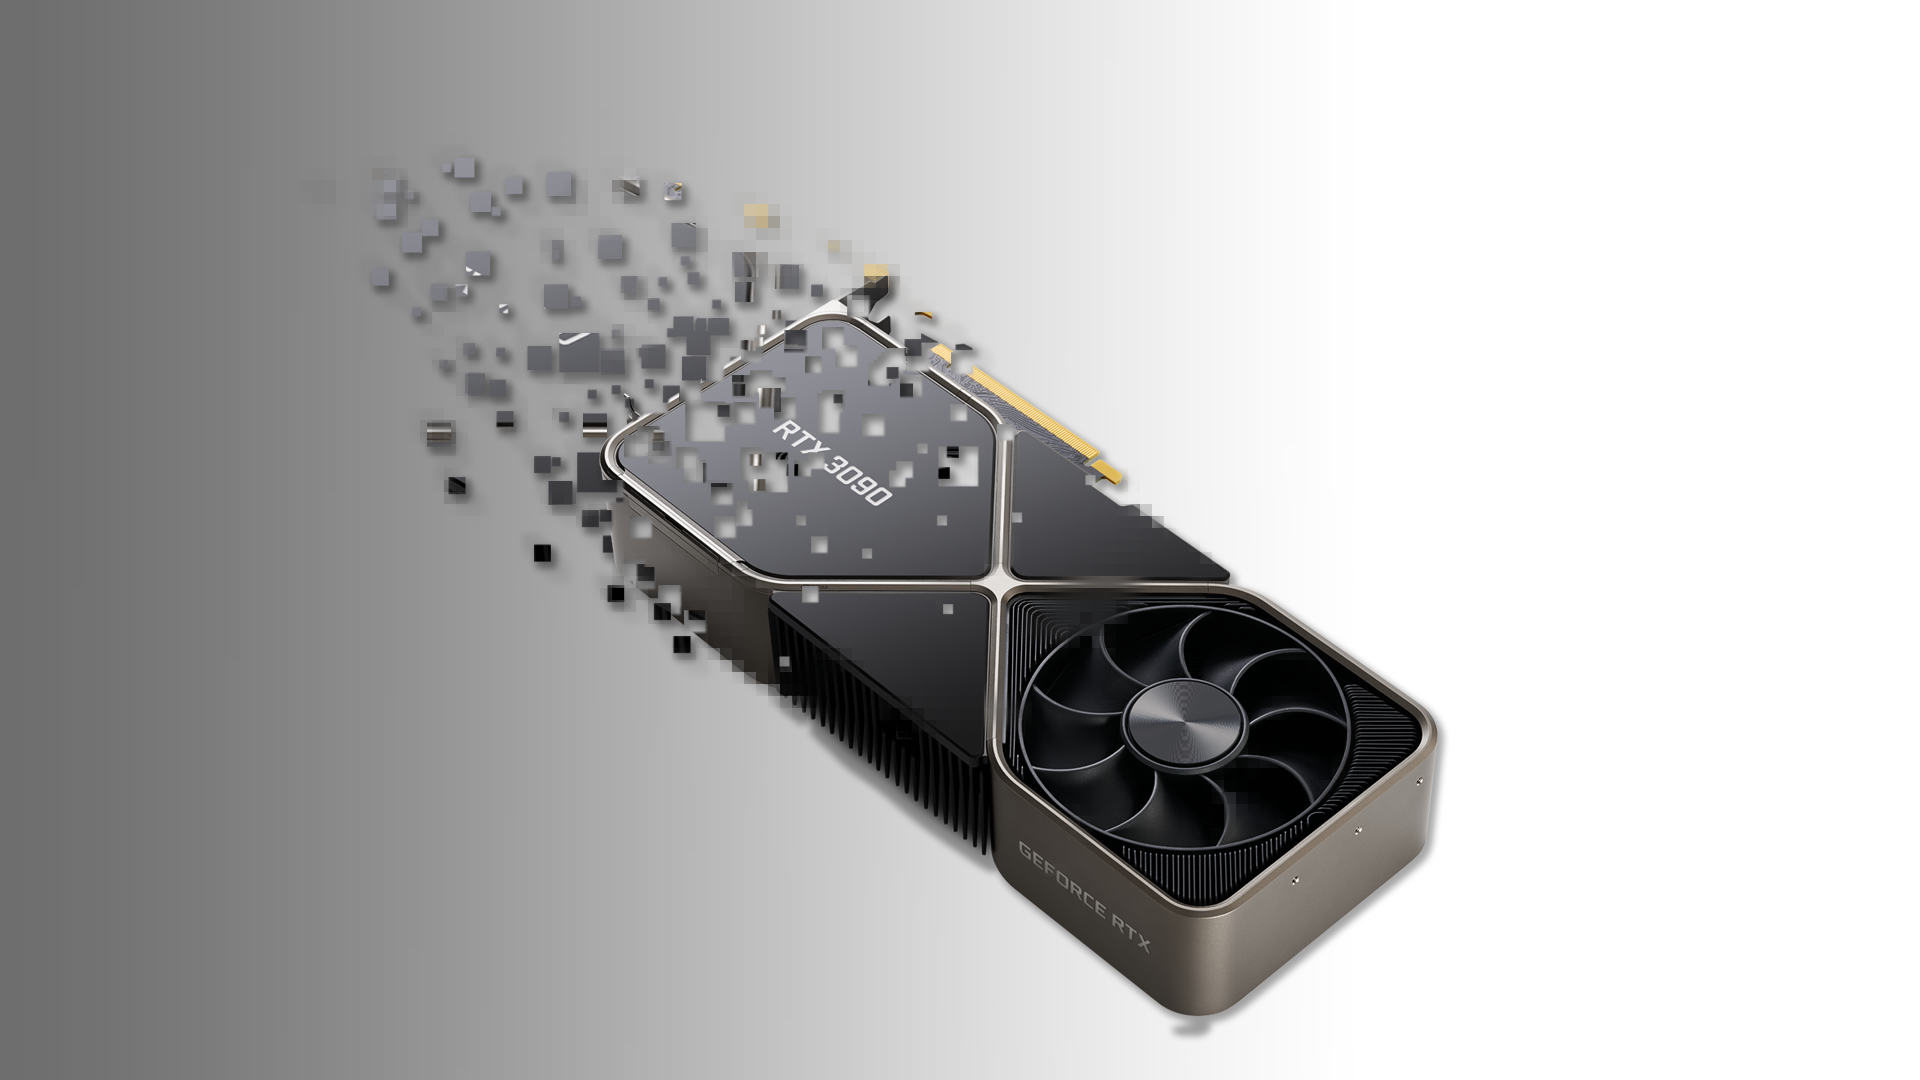 Una Nvidia GeForce RTX 3090 desintegrándose en píxeles sobre un fondo degradado gris